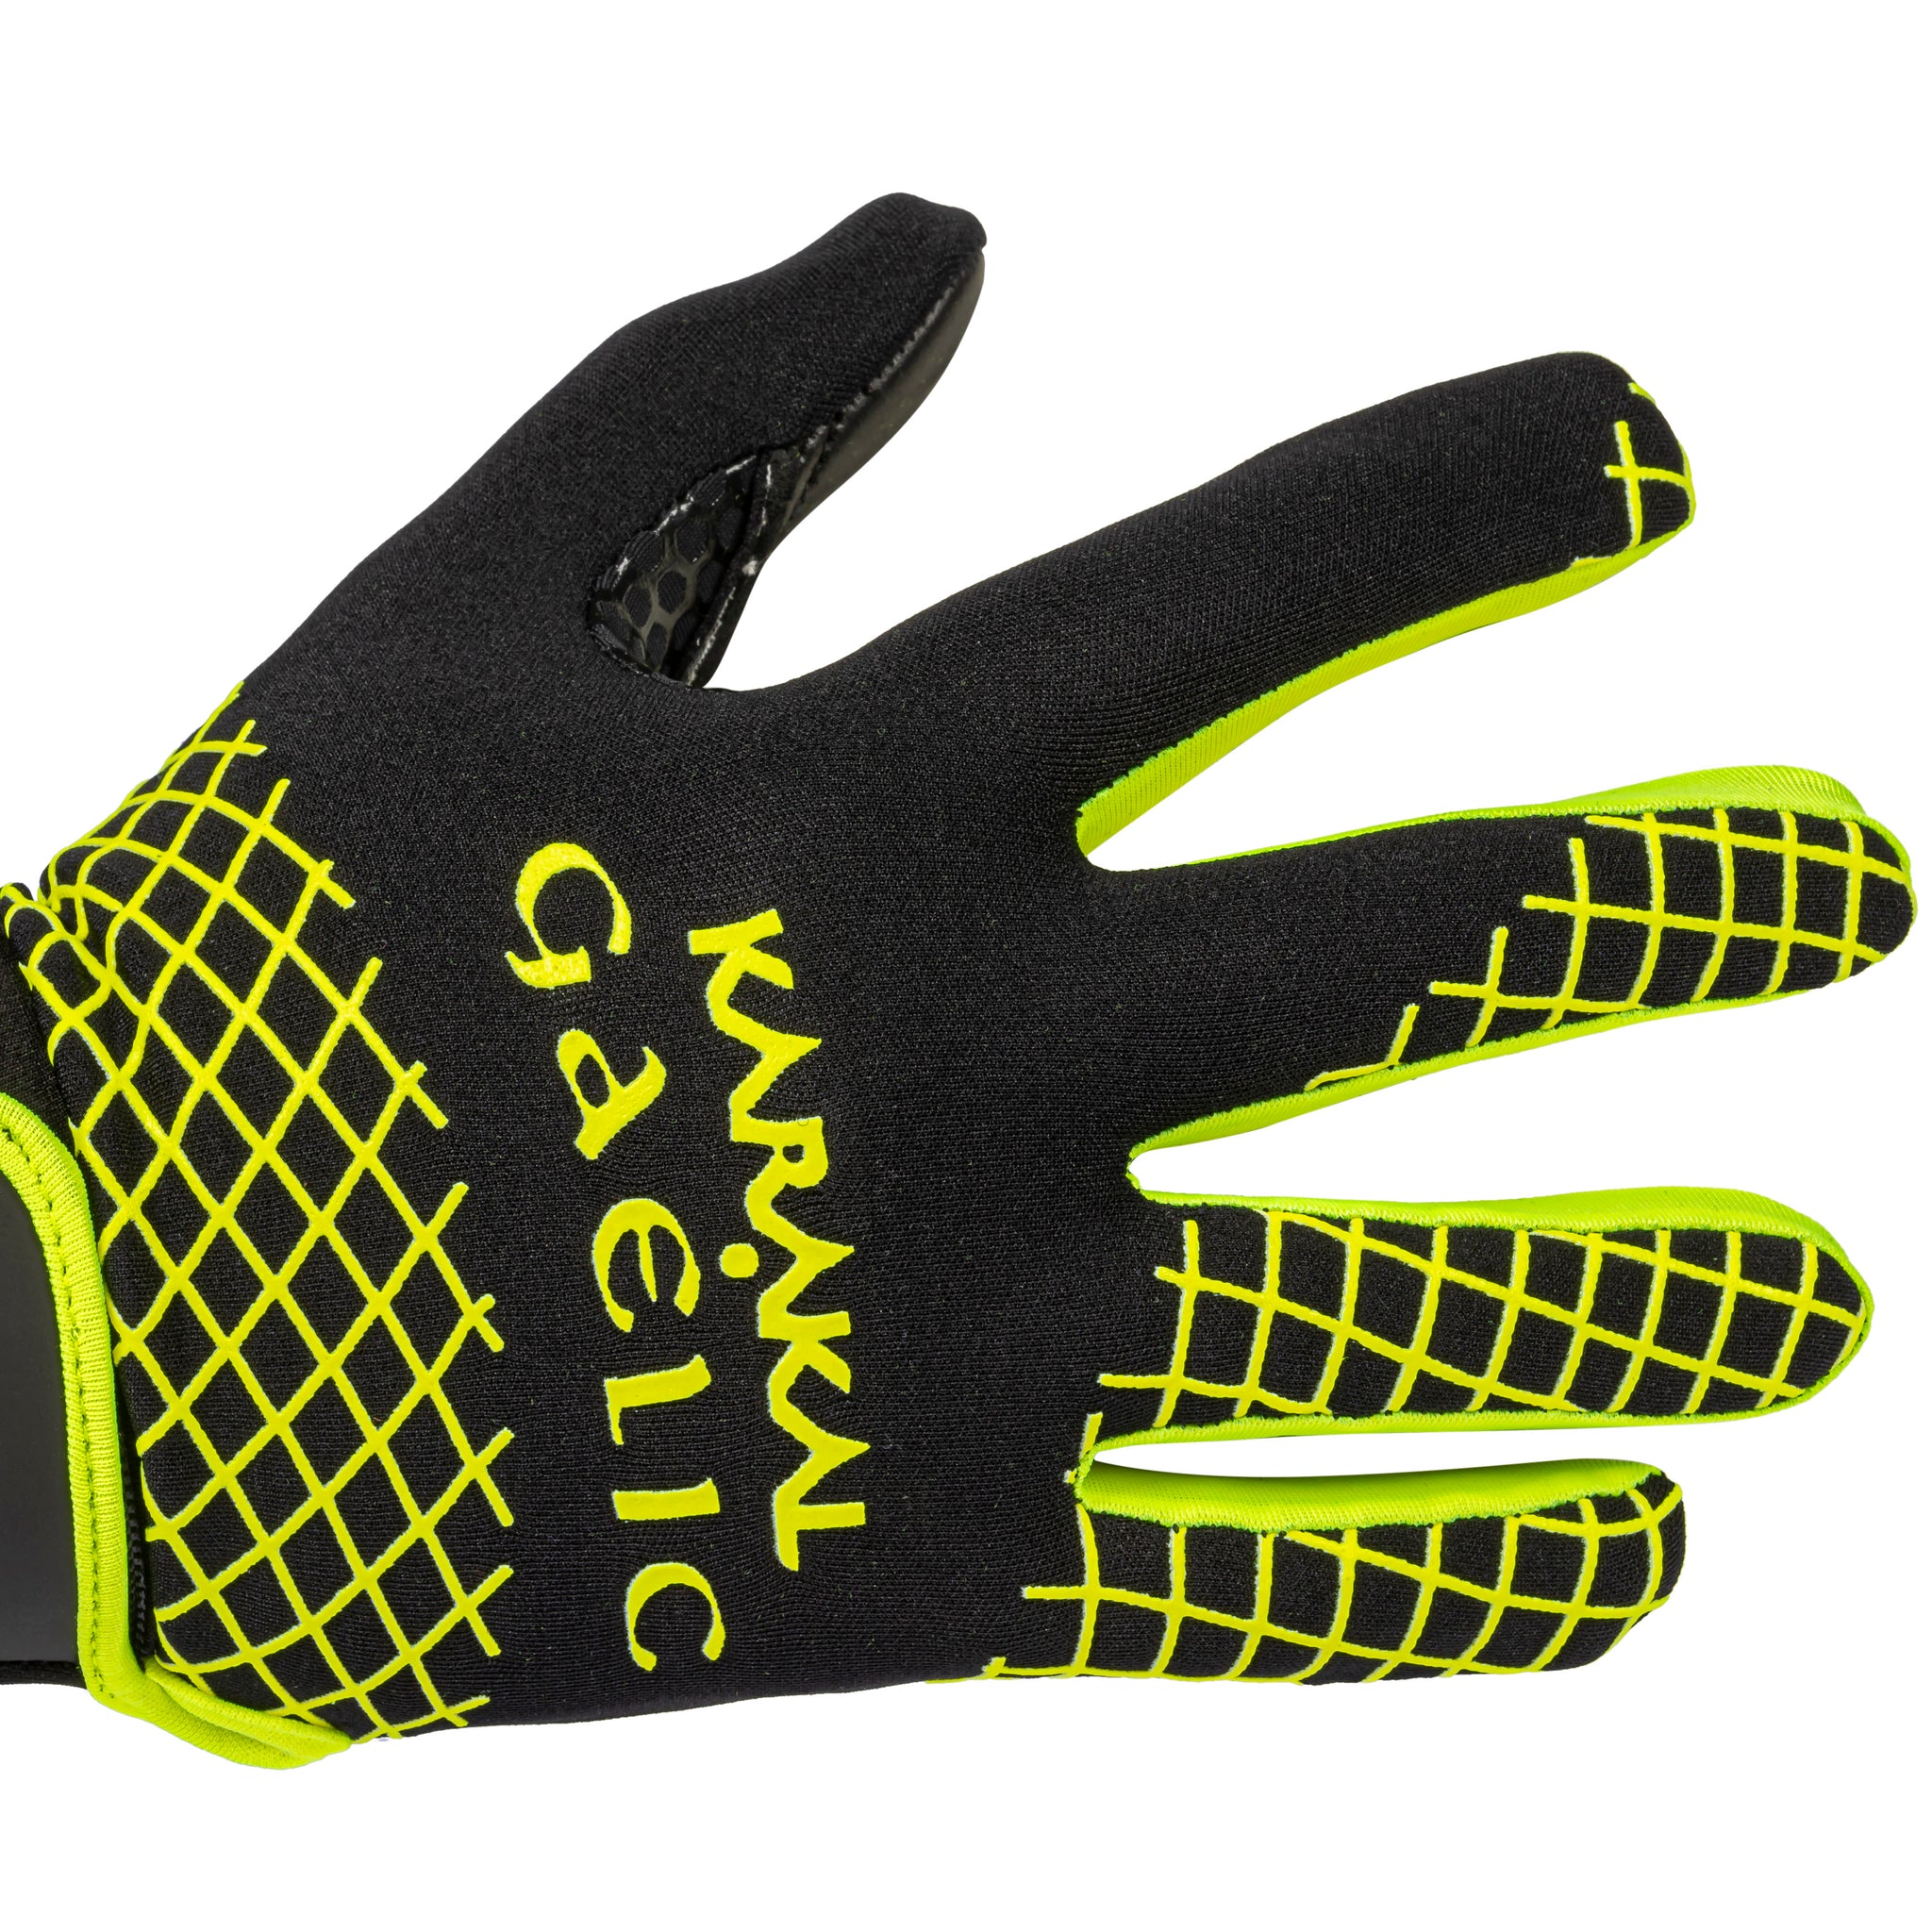 Karakal Web Gaelic Glove Black Neon Yellow